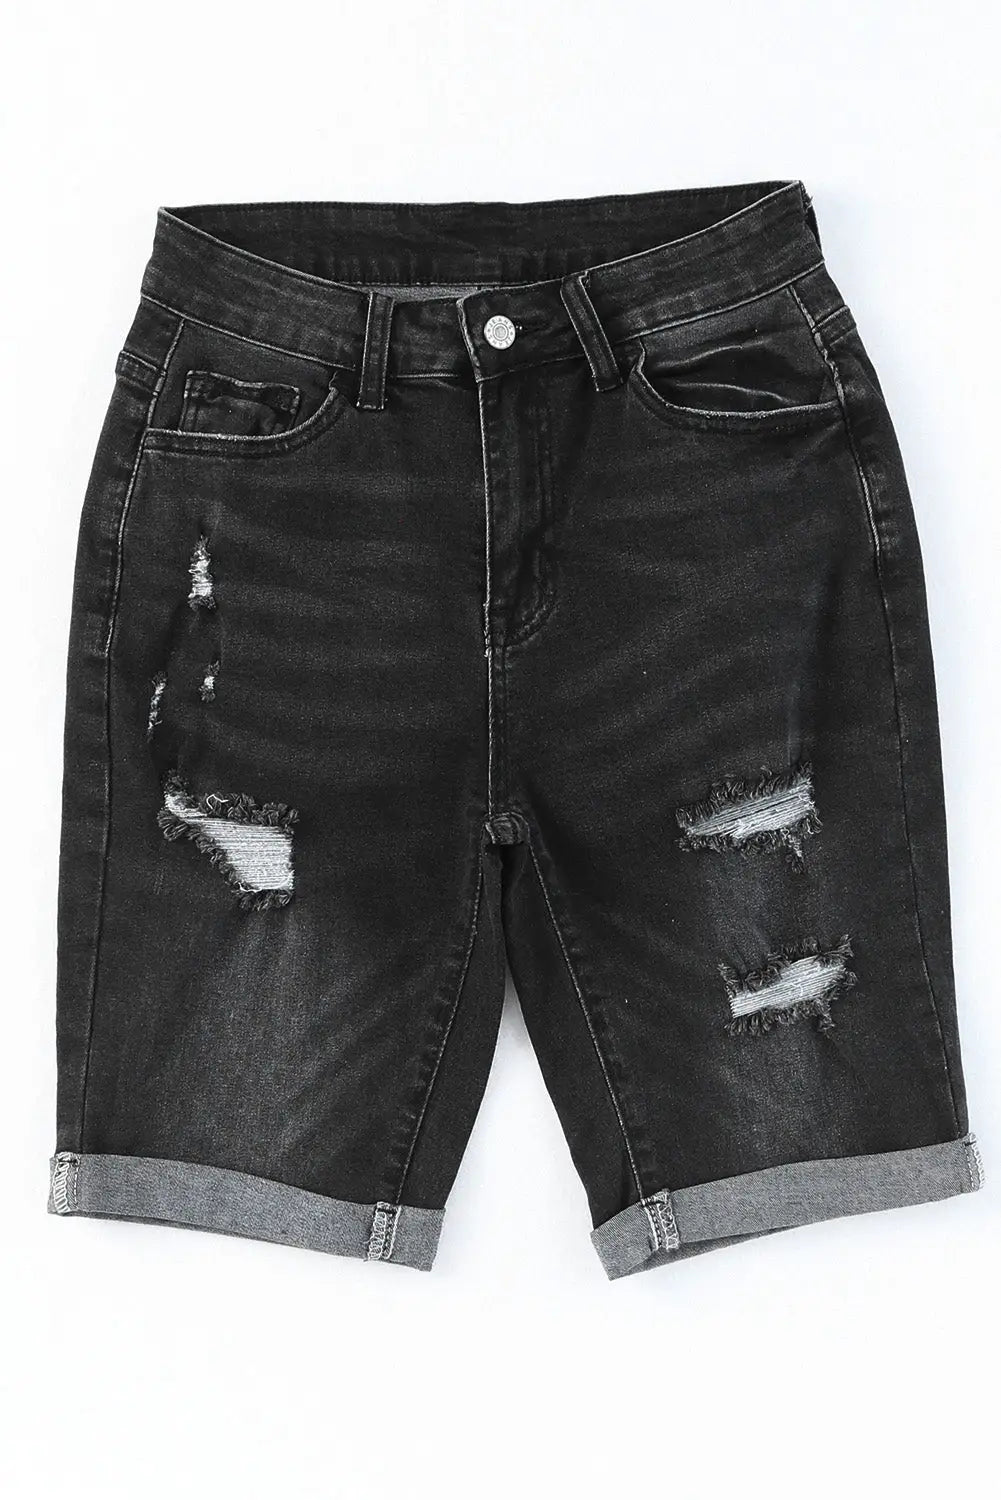 Black roll-up distressed bermuda denim shorts